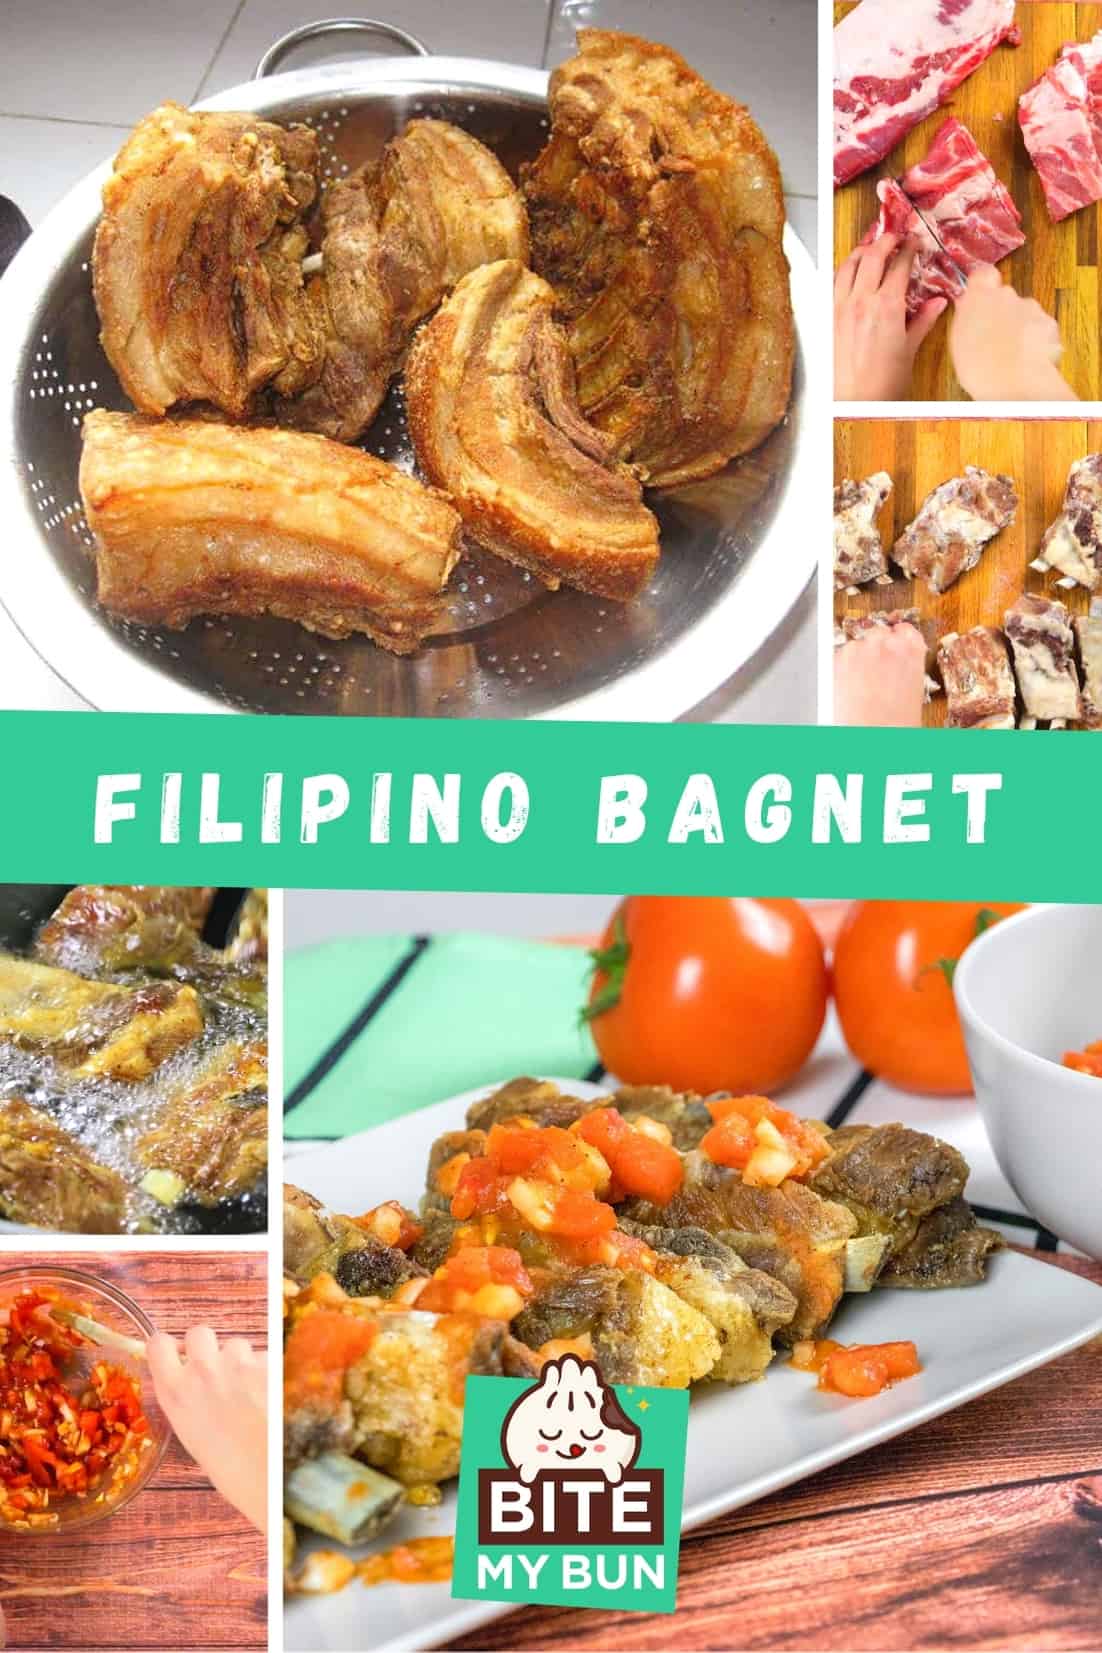 Bagnet philippin croustillant avec trempette bagoong alamang